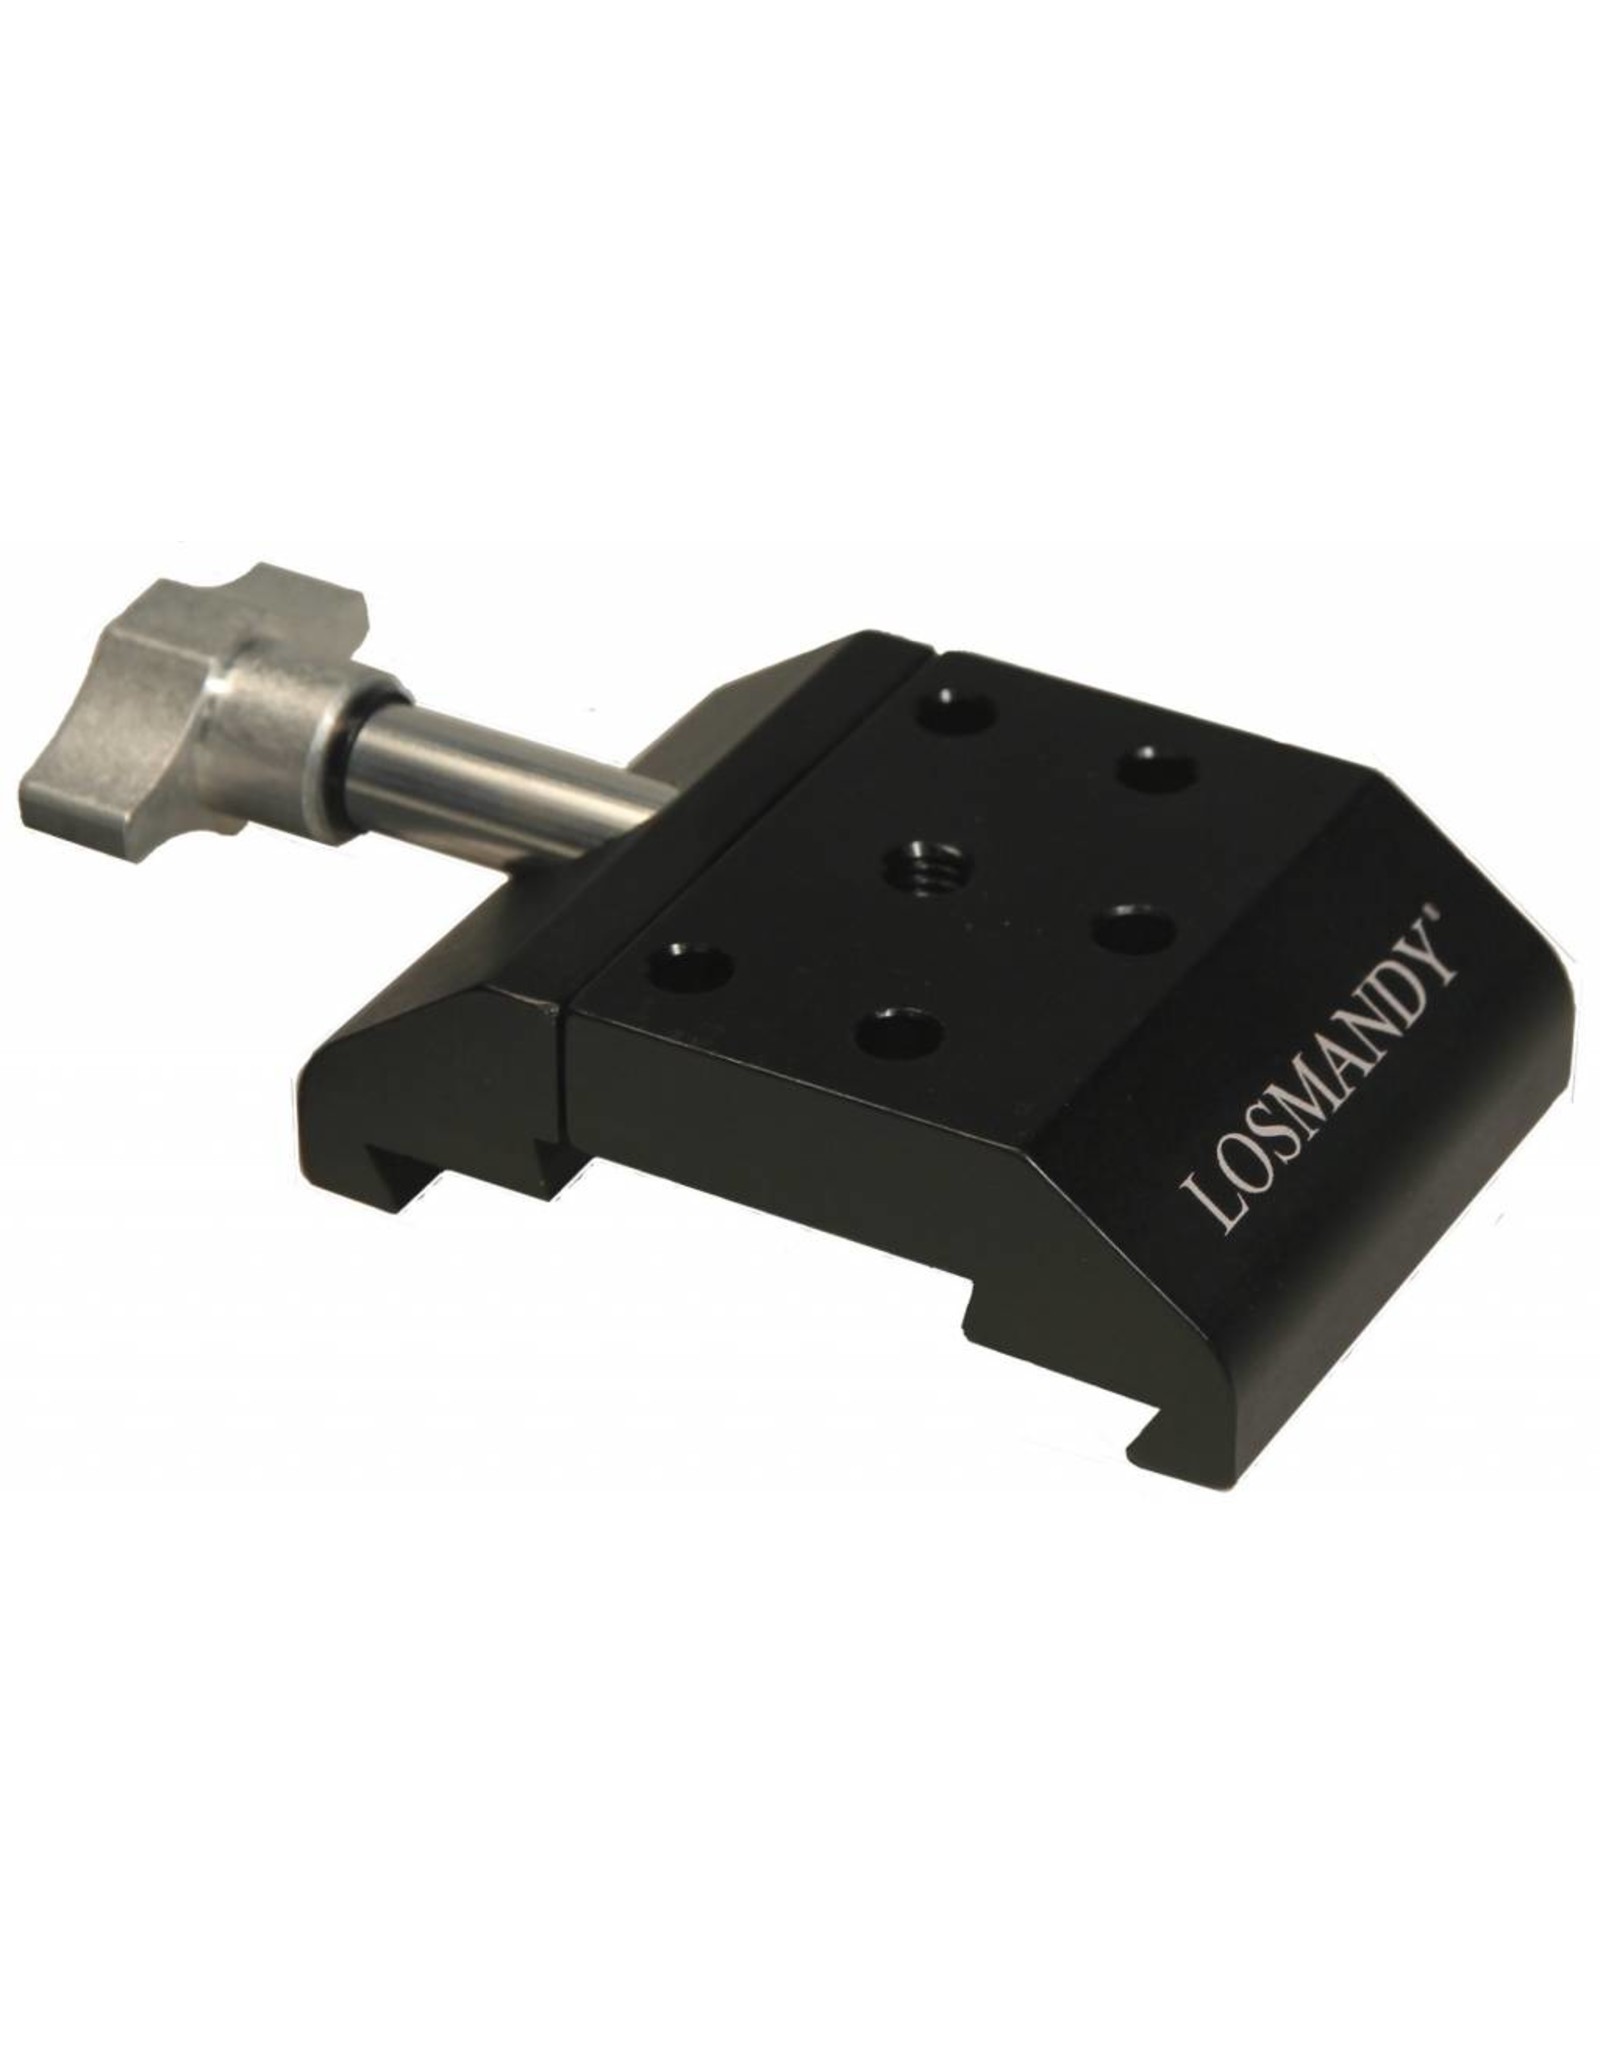 Losmandy Losmandy DUAL Dovetail plate adapter